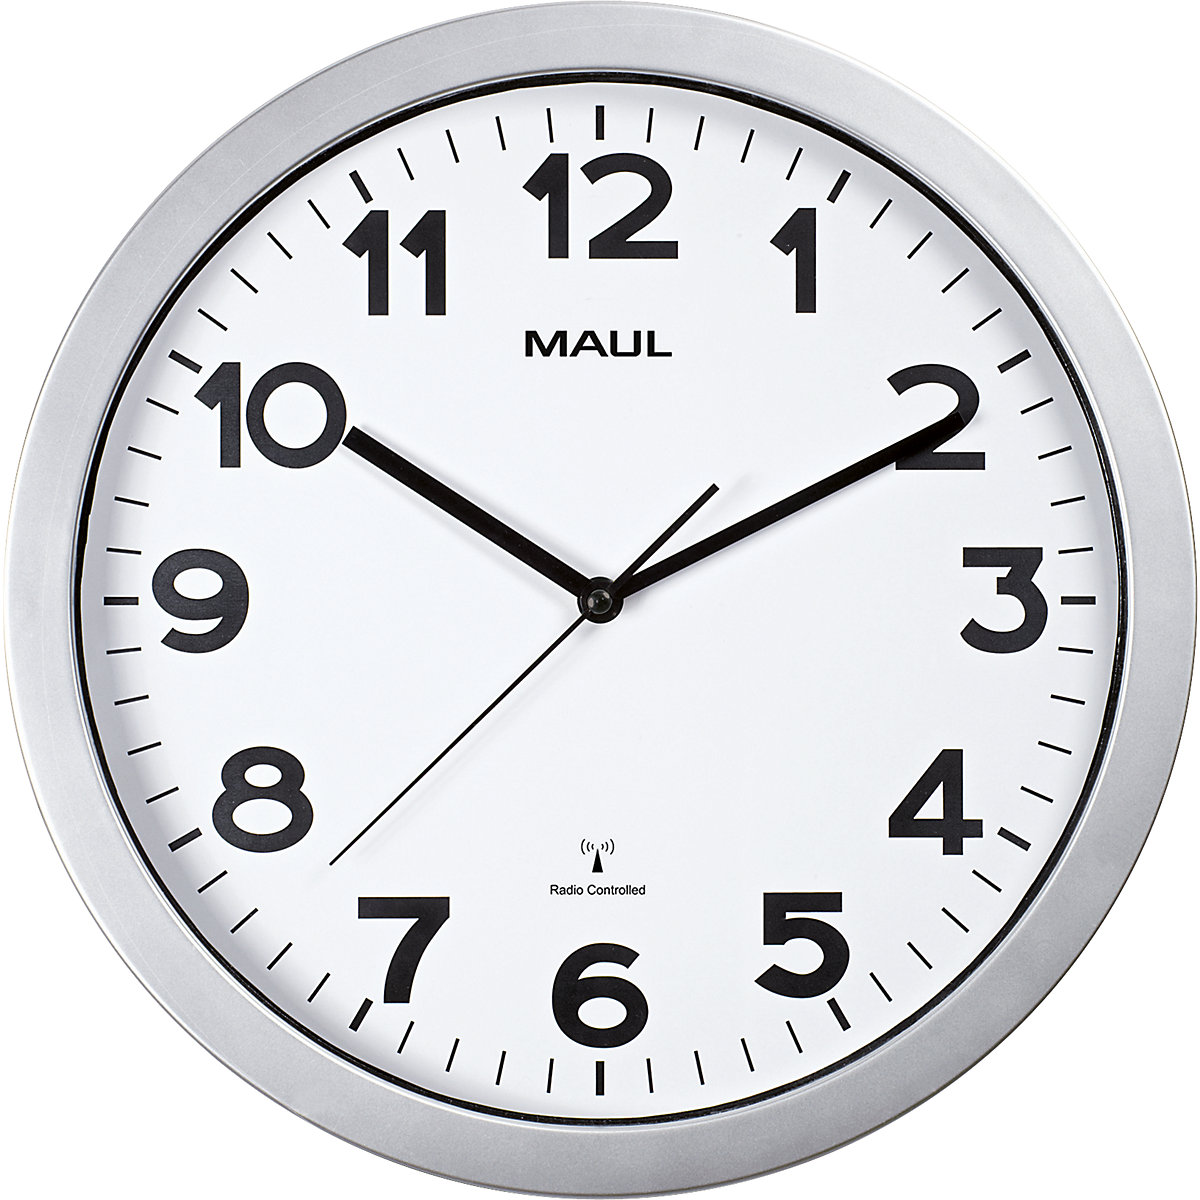 MAULstep wall clock - MAUL